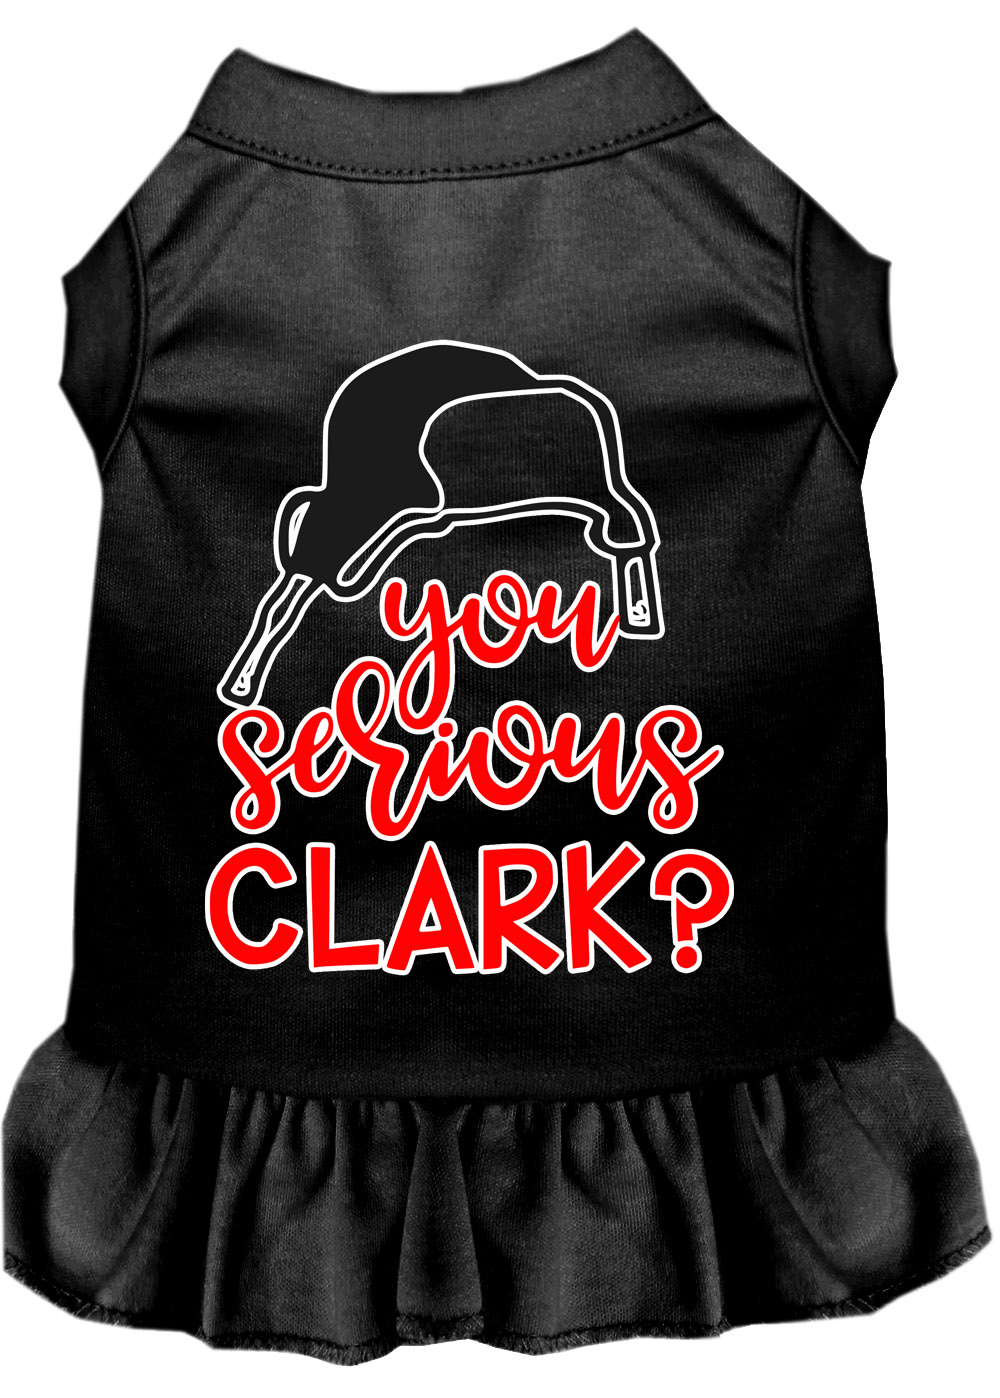 You Serious Clark? Screen Print Dog Dress Black XS